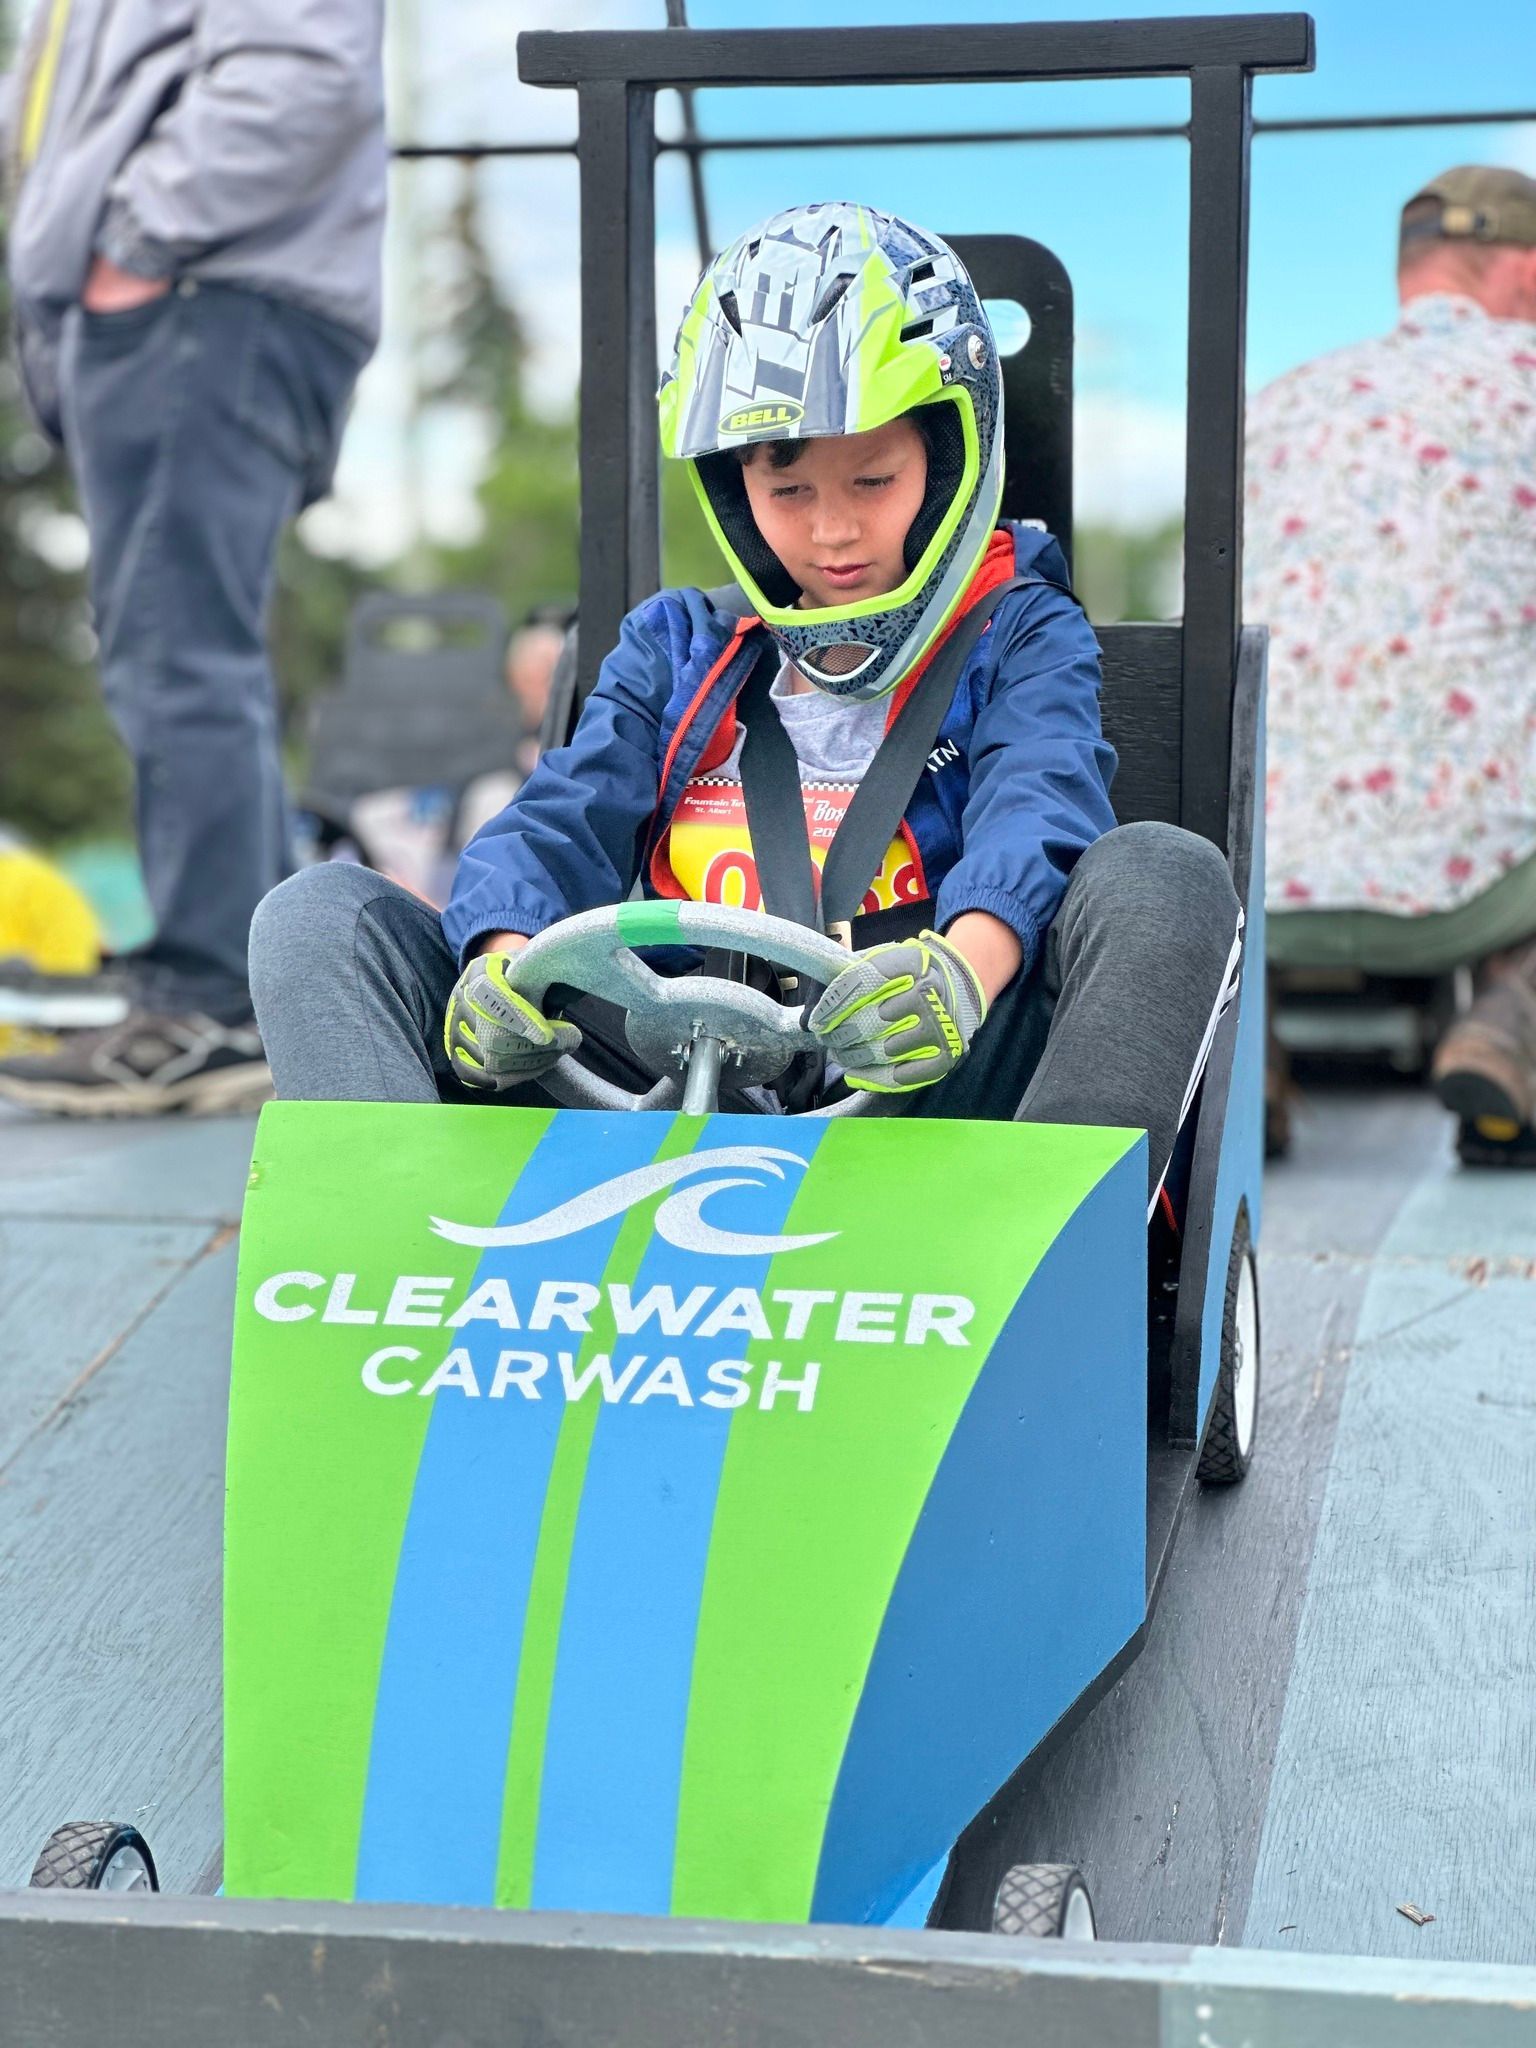 Boy in soap box car showing ClearWater CarWash logo